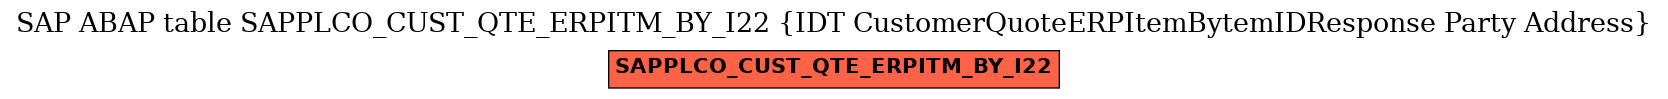 E-R Diagram for table SAPPLCO_CUST_QTE_ERPITM_BY_I22 (IDT CustomerQuoteERPItemBytemIDResponse Party Address)